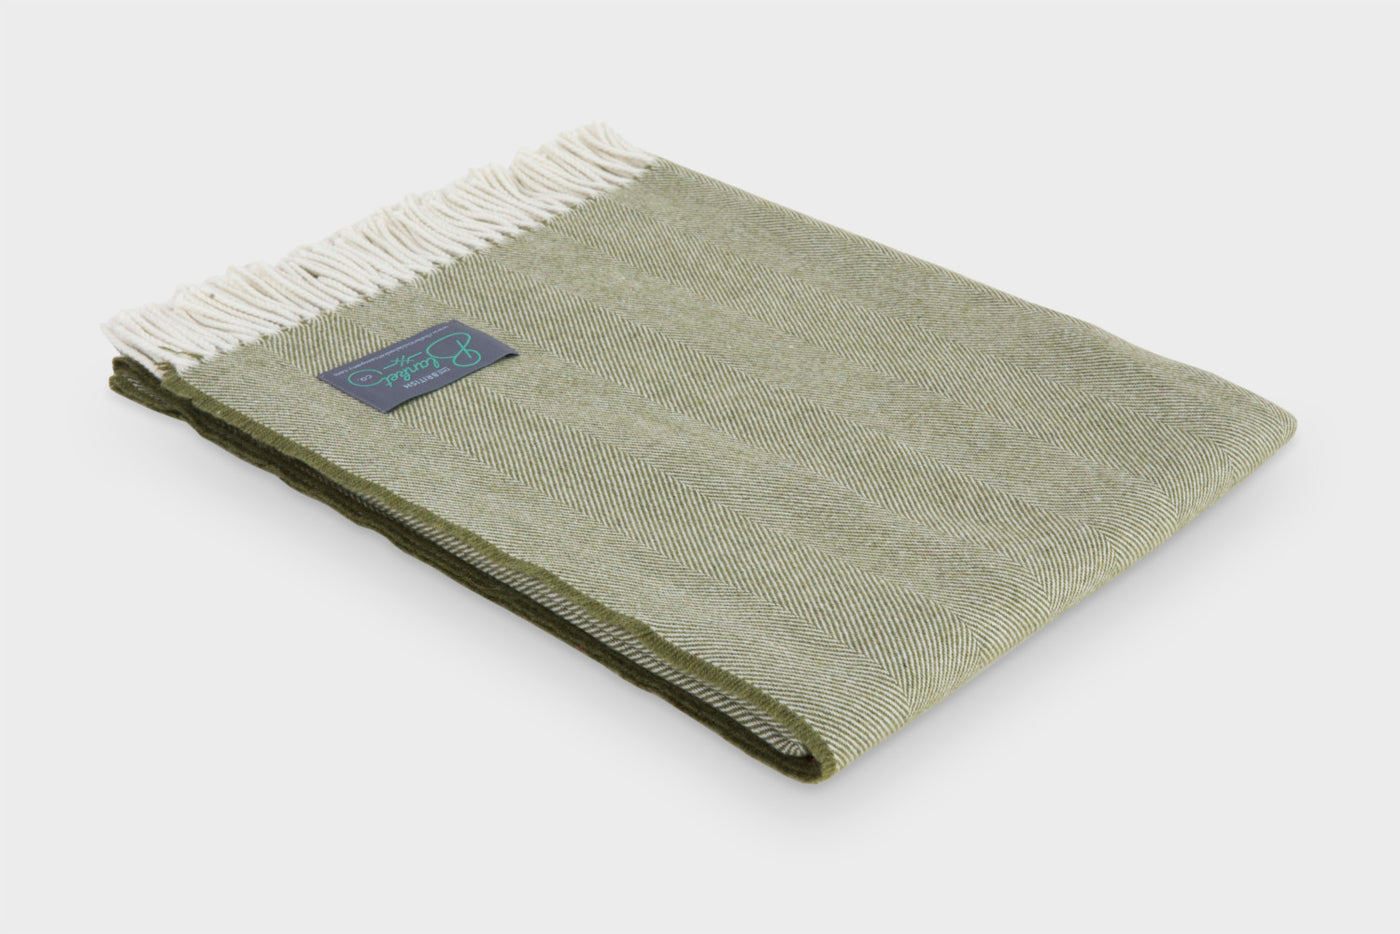 Folded green merino herringbone wool throw by The British Blanket Company